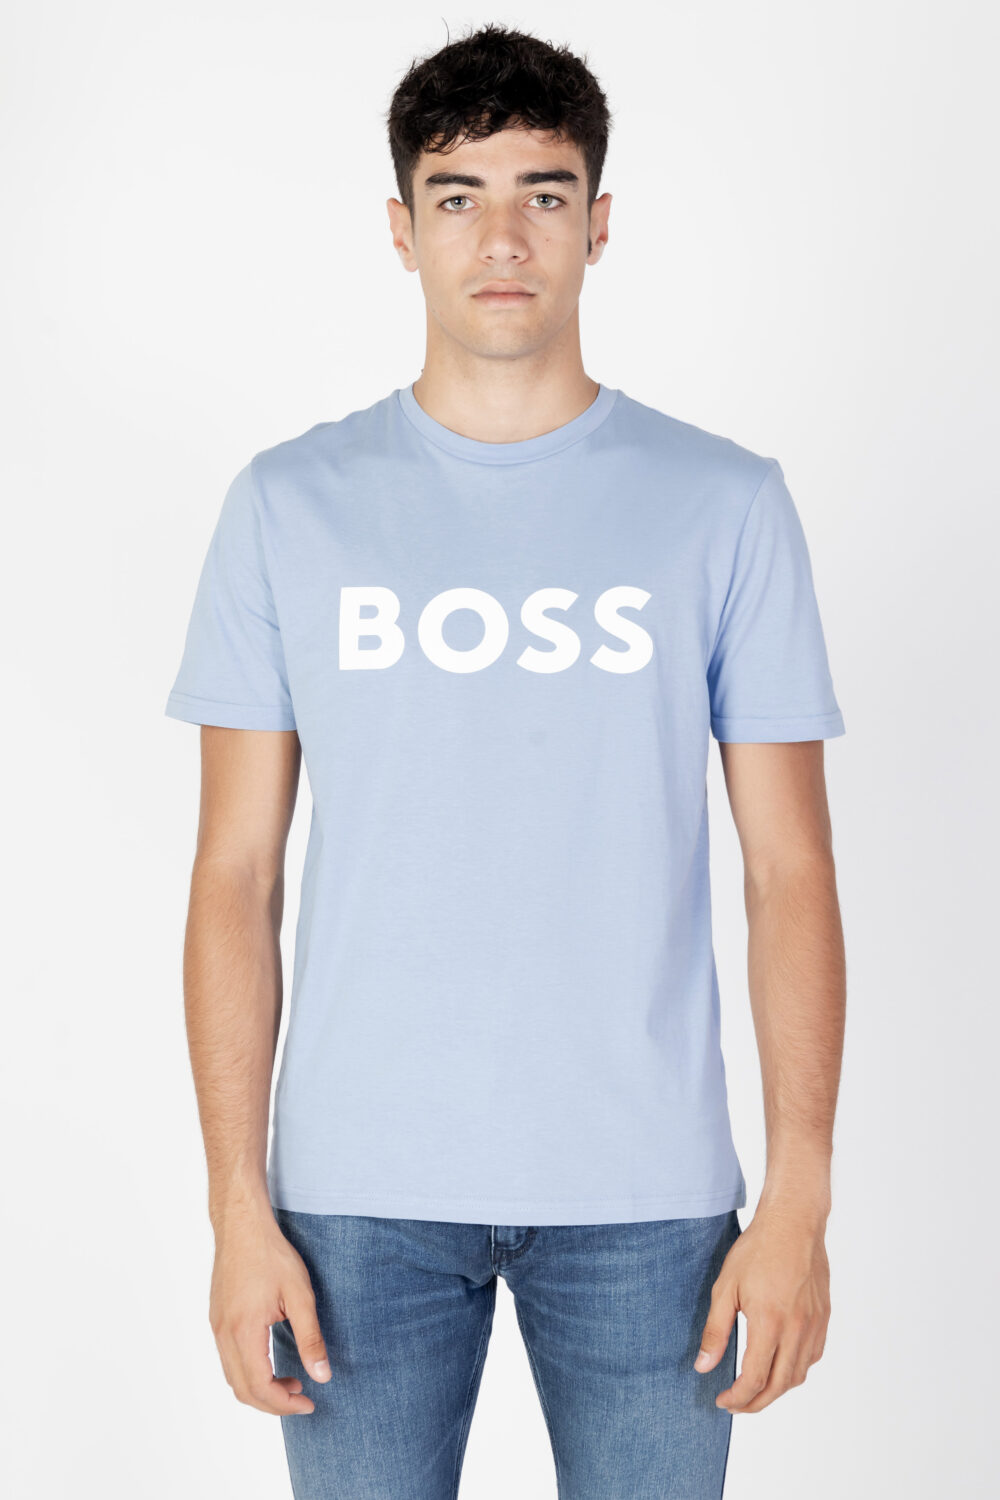 T-shirt Boss thinking 1 Celeste - Foto 4